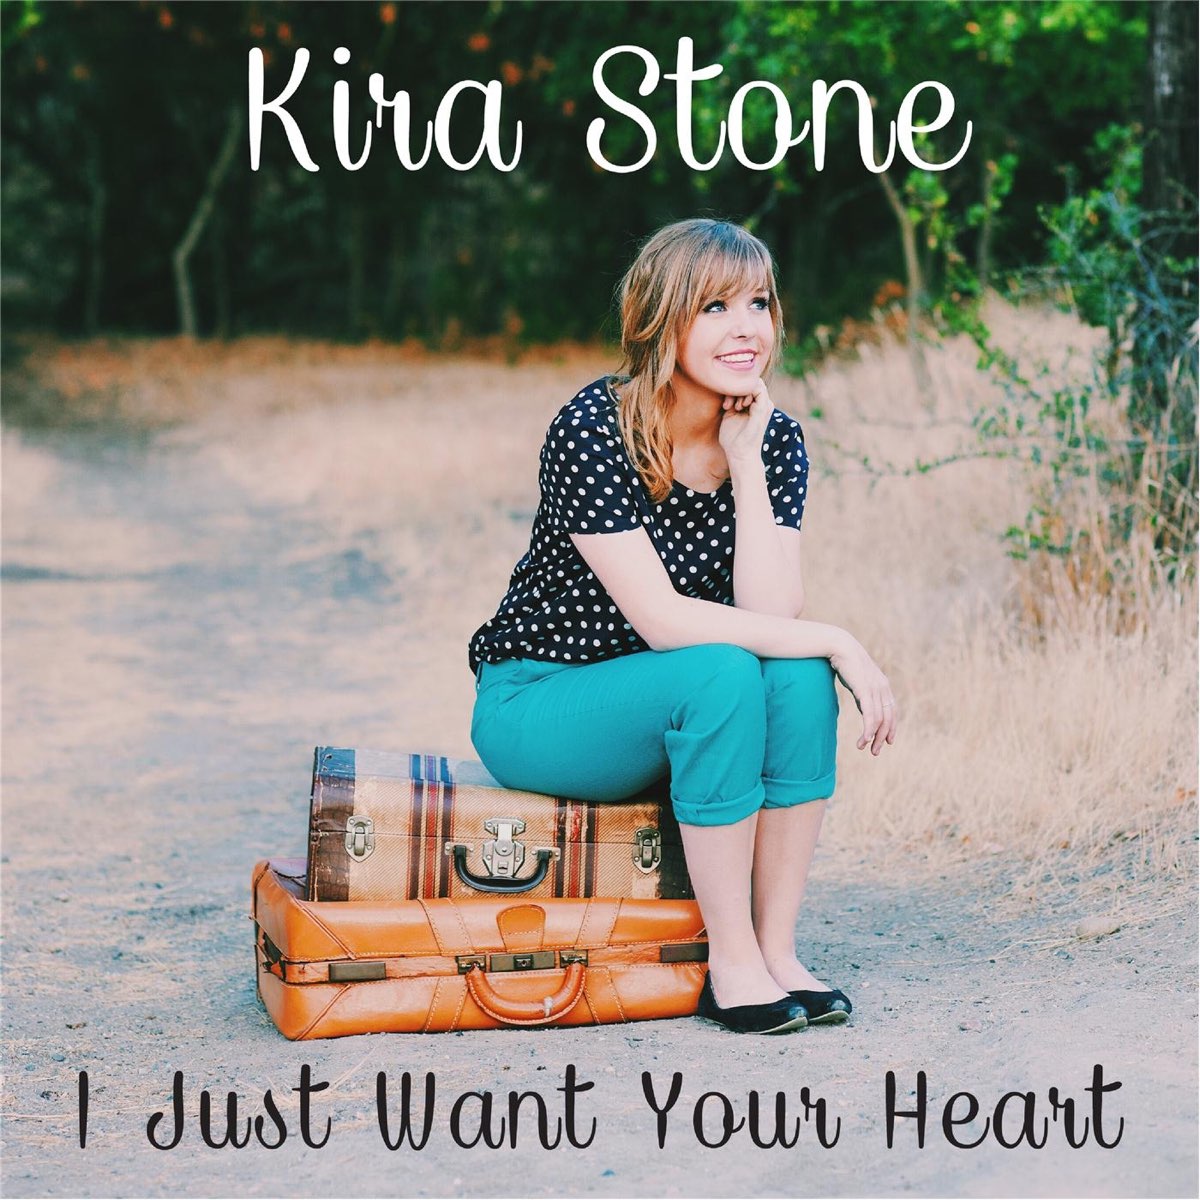 Kira stone. Kira Stone модель. Kira Single album. Kira Stone биография.